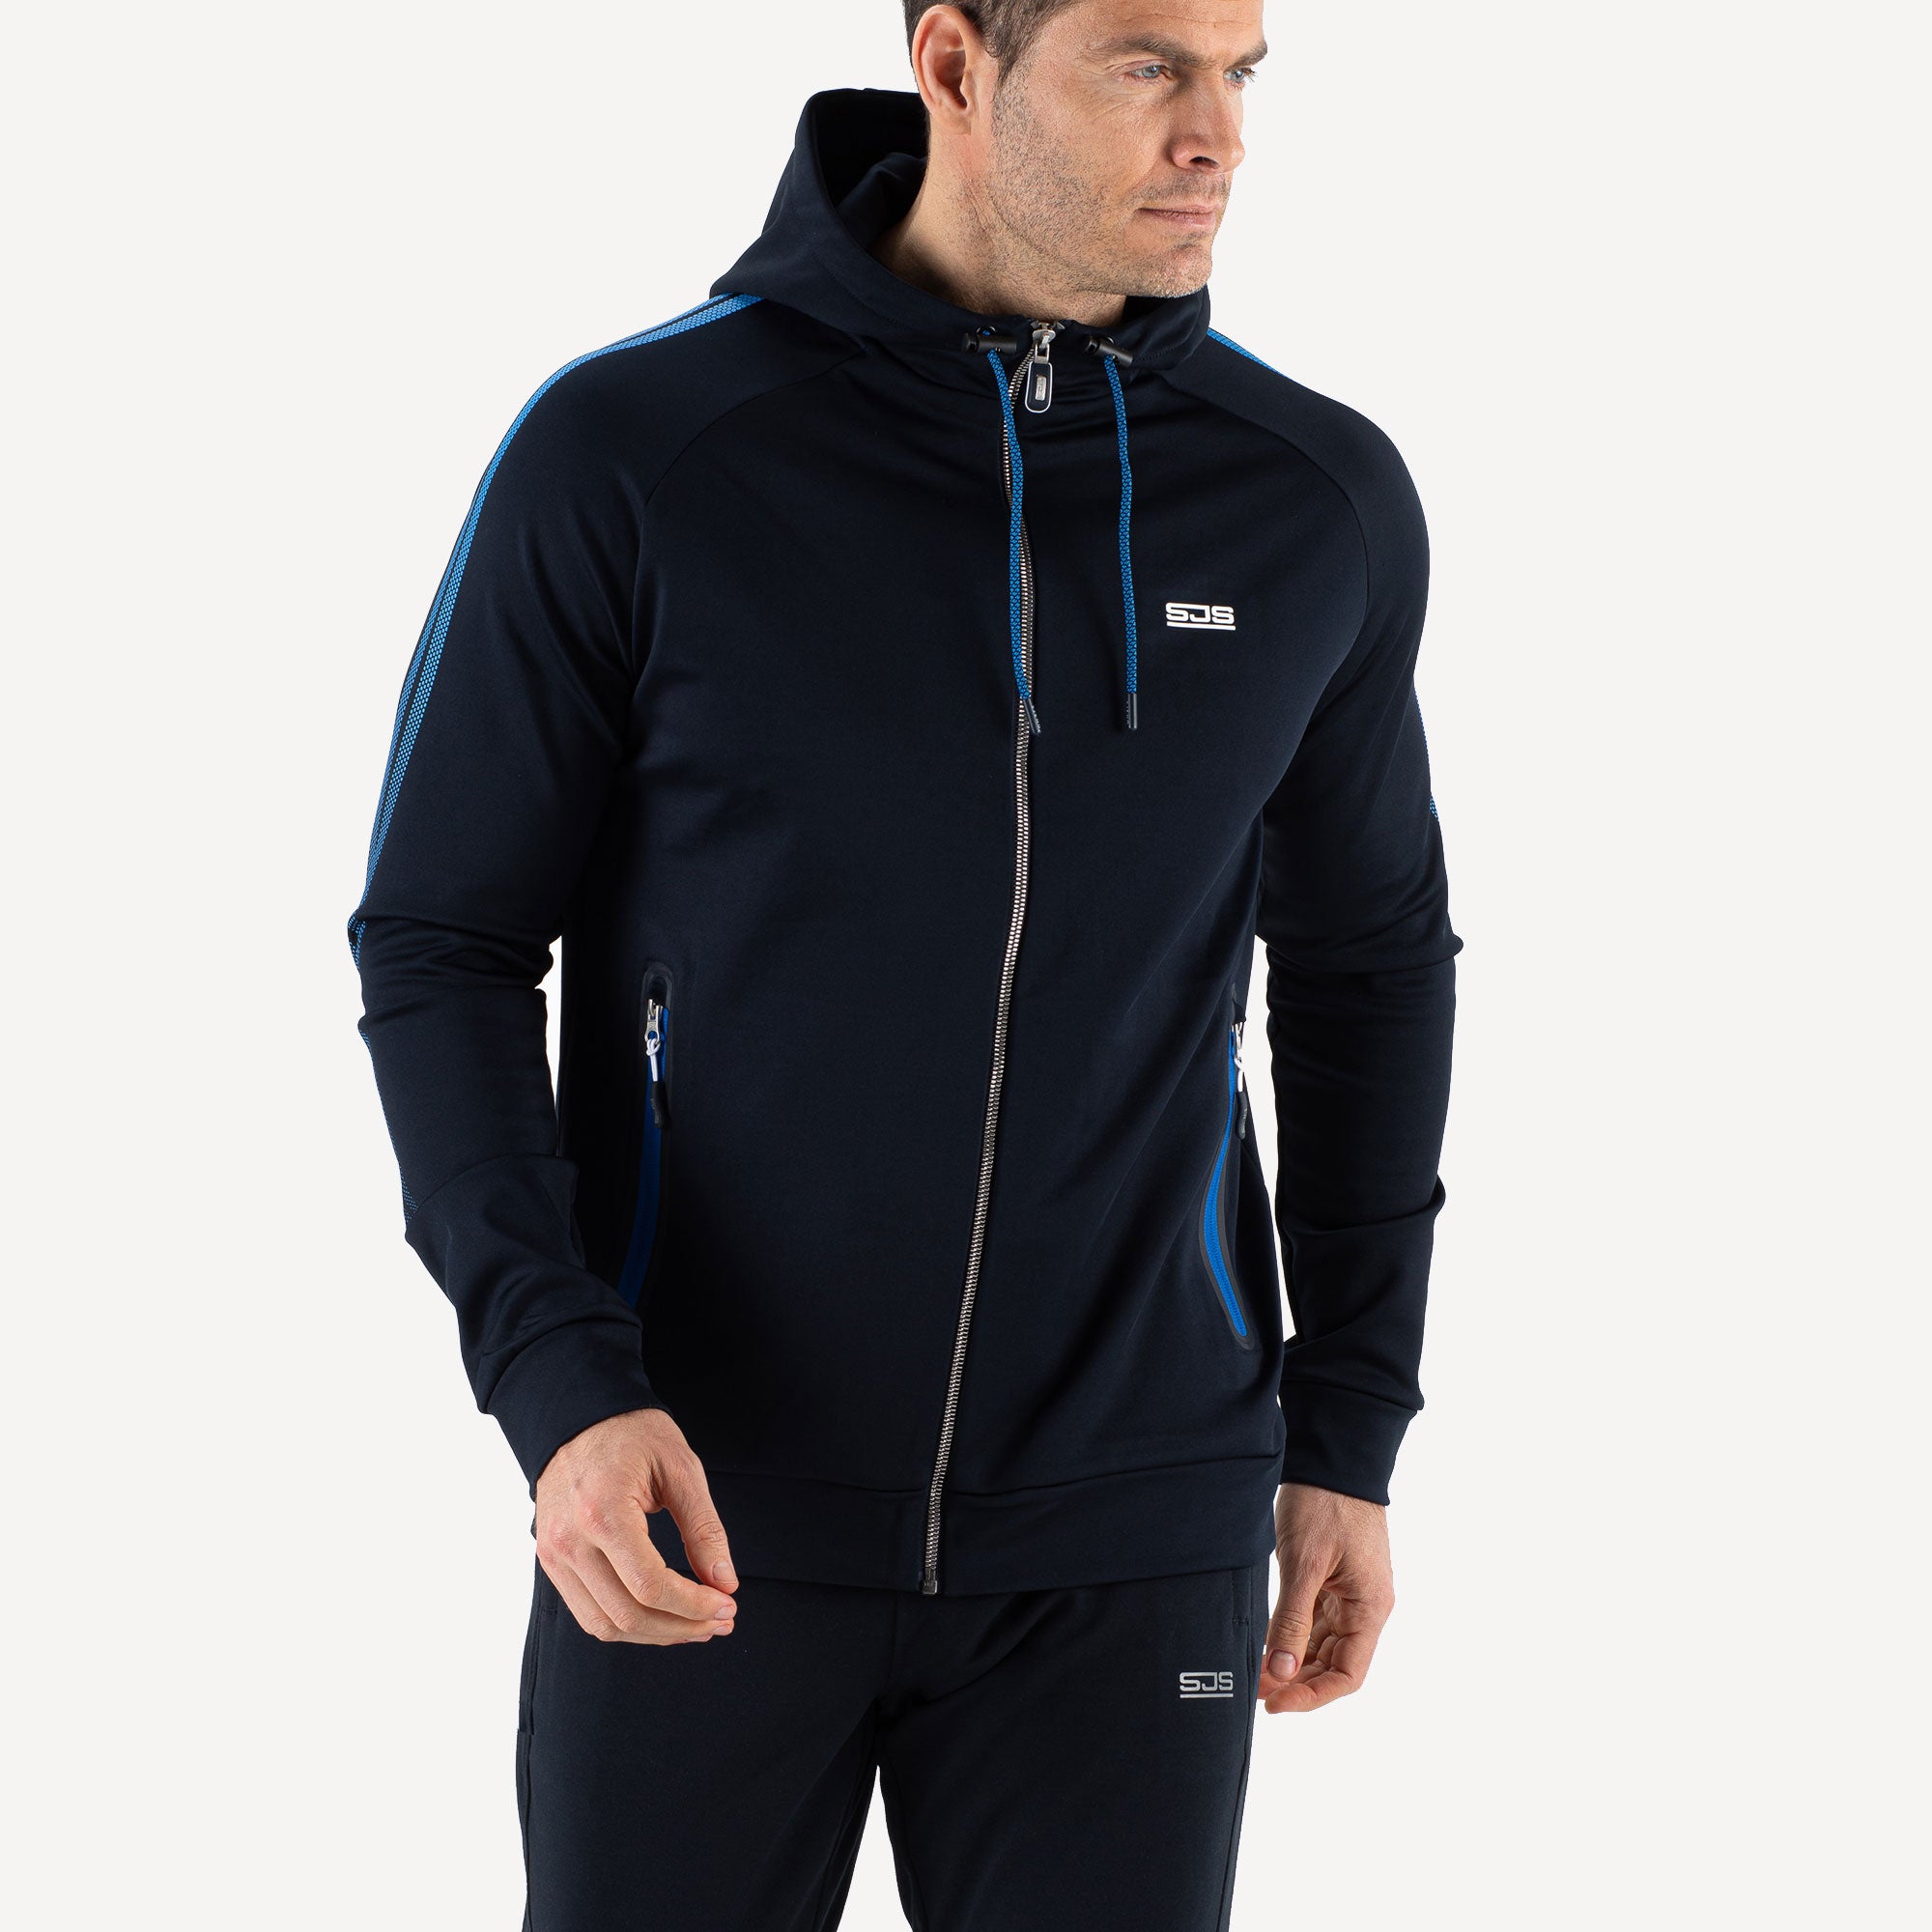 Sjeng Sports Oleg Men's Hooded Tennis Jacket Blue (1)